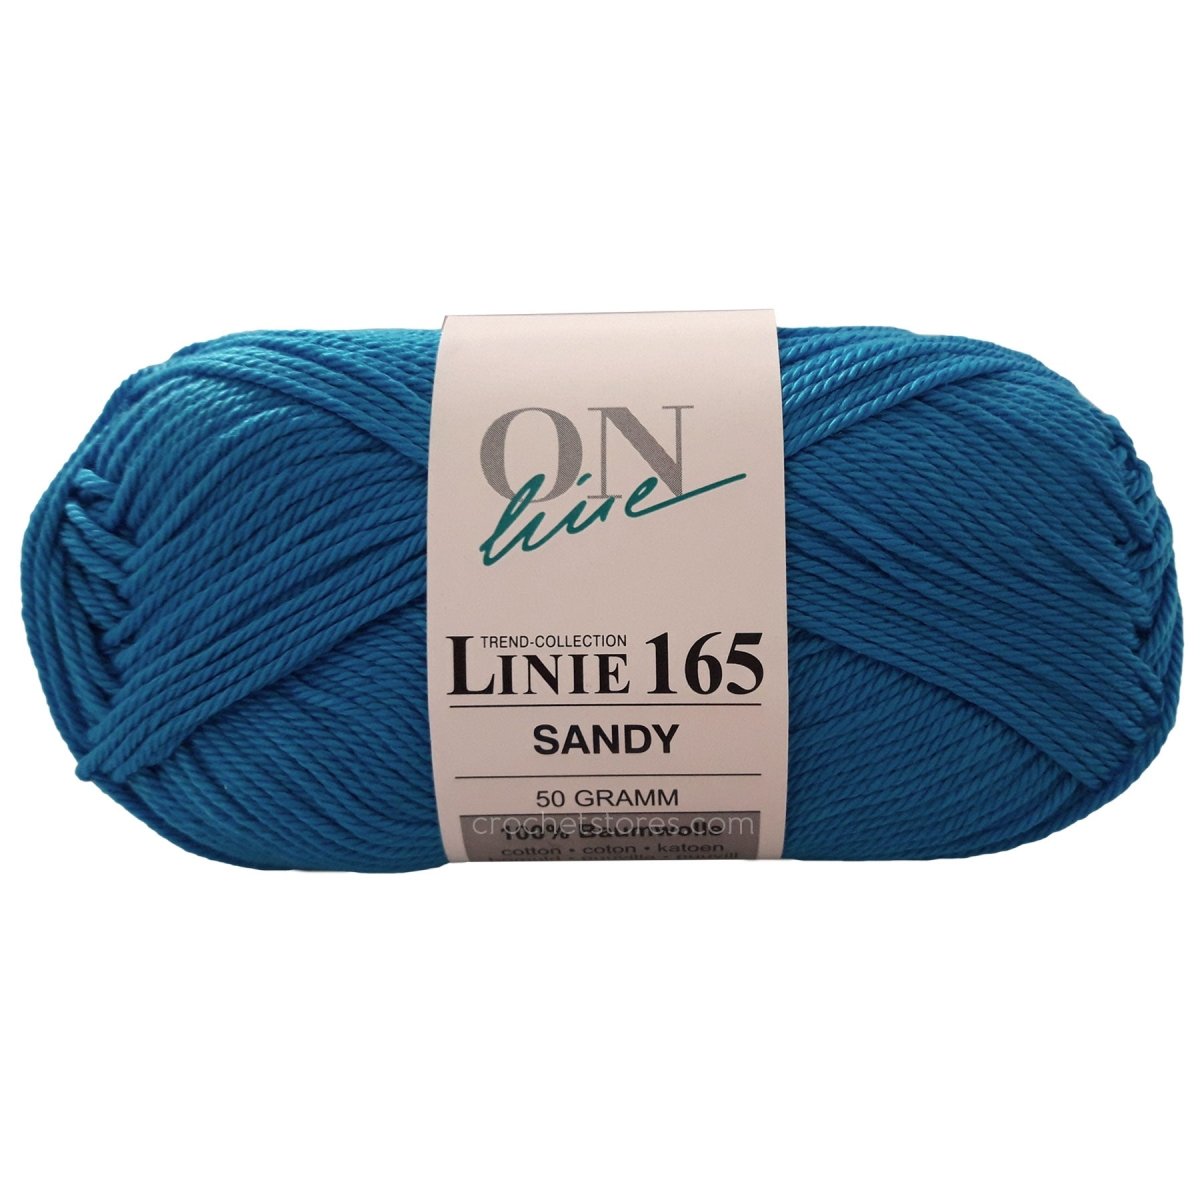 SANDY - Crochetstores110165-020140134366165828